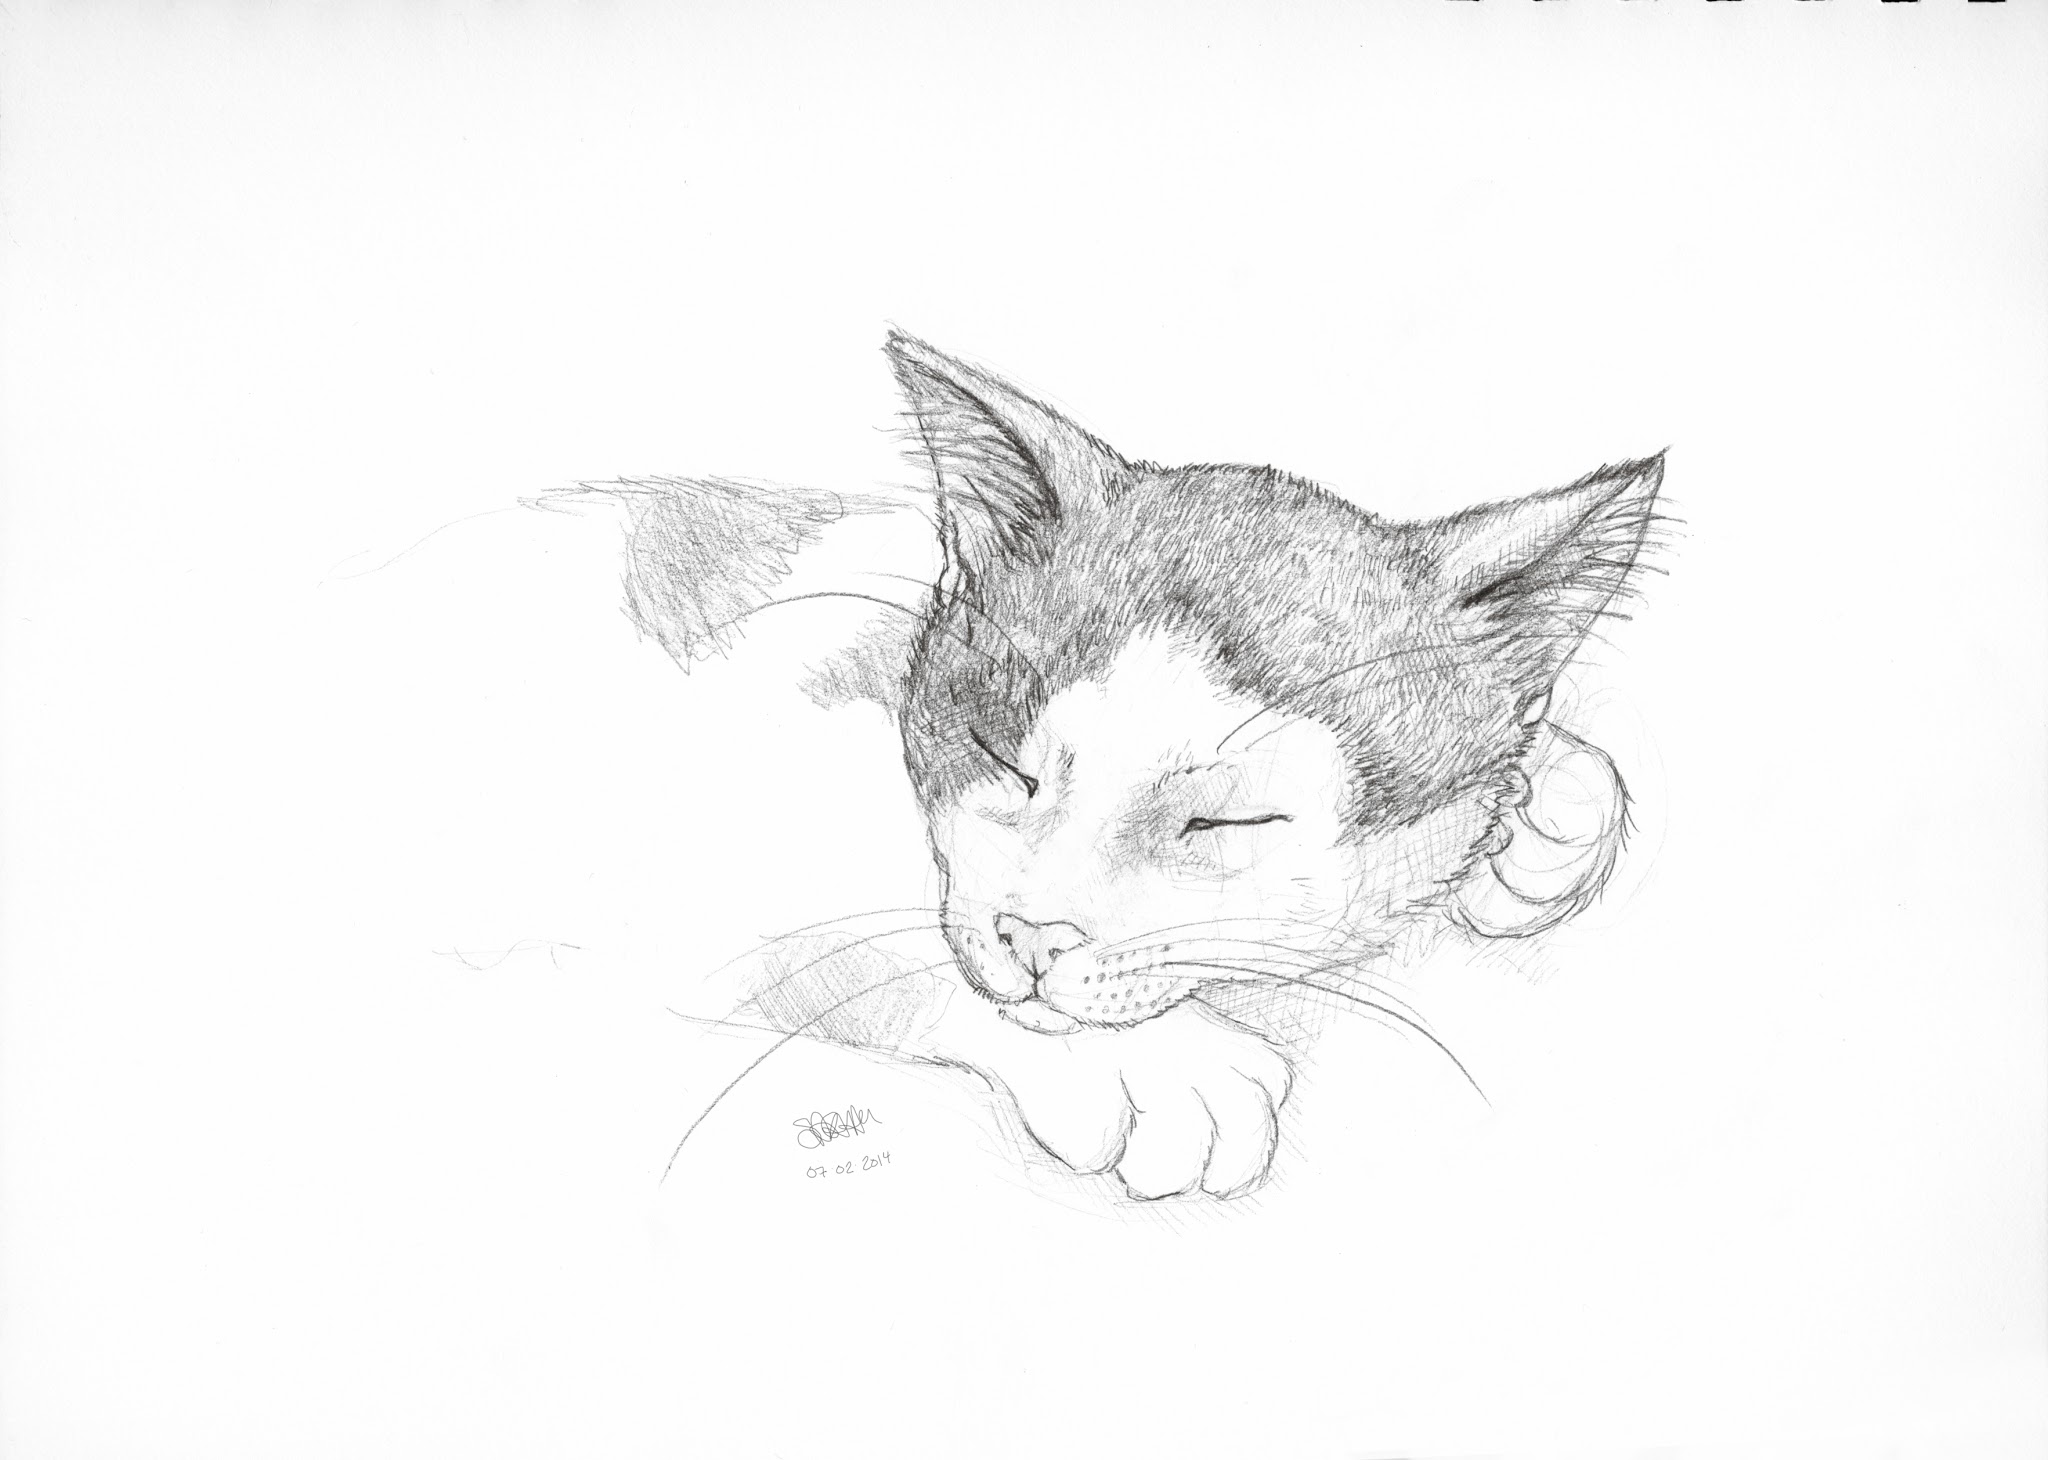 Sleeping Cat by S. Rain Lawrence